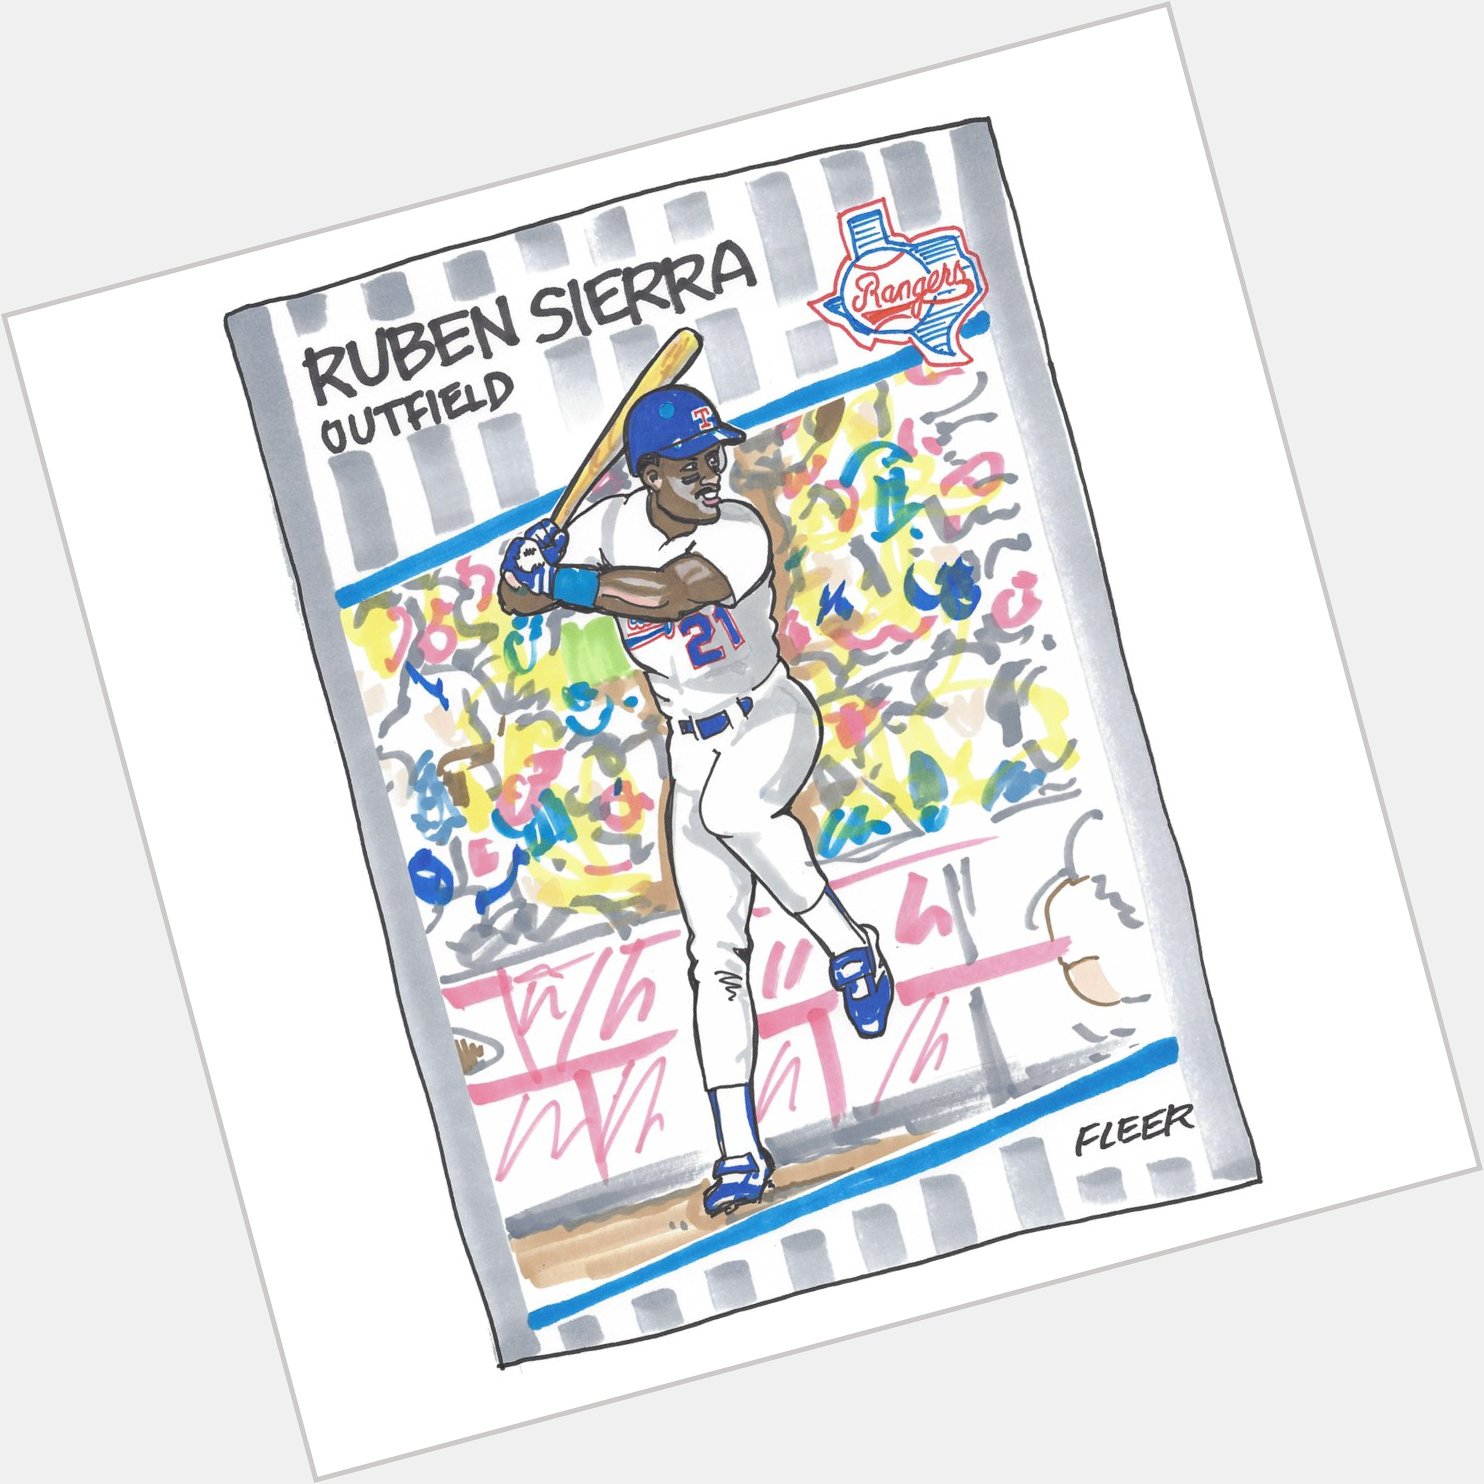 Happy Birthday Ruben Sierra.
20 year career - 2152 hits, 306 HR, 1322 RBI.  Not bad  